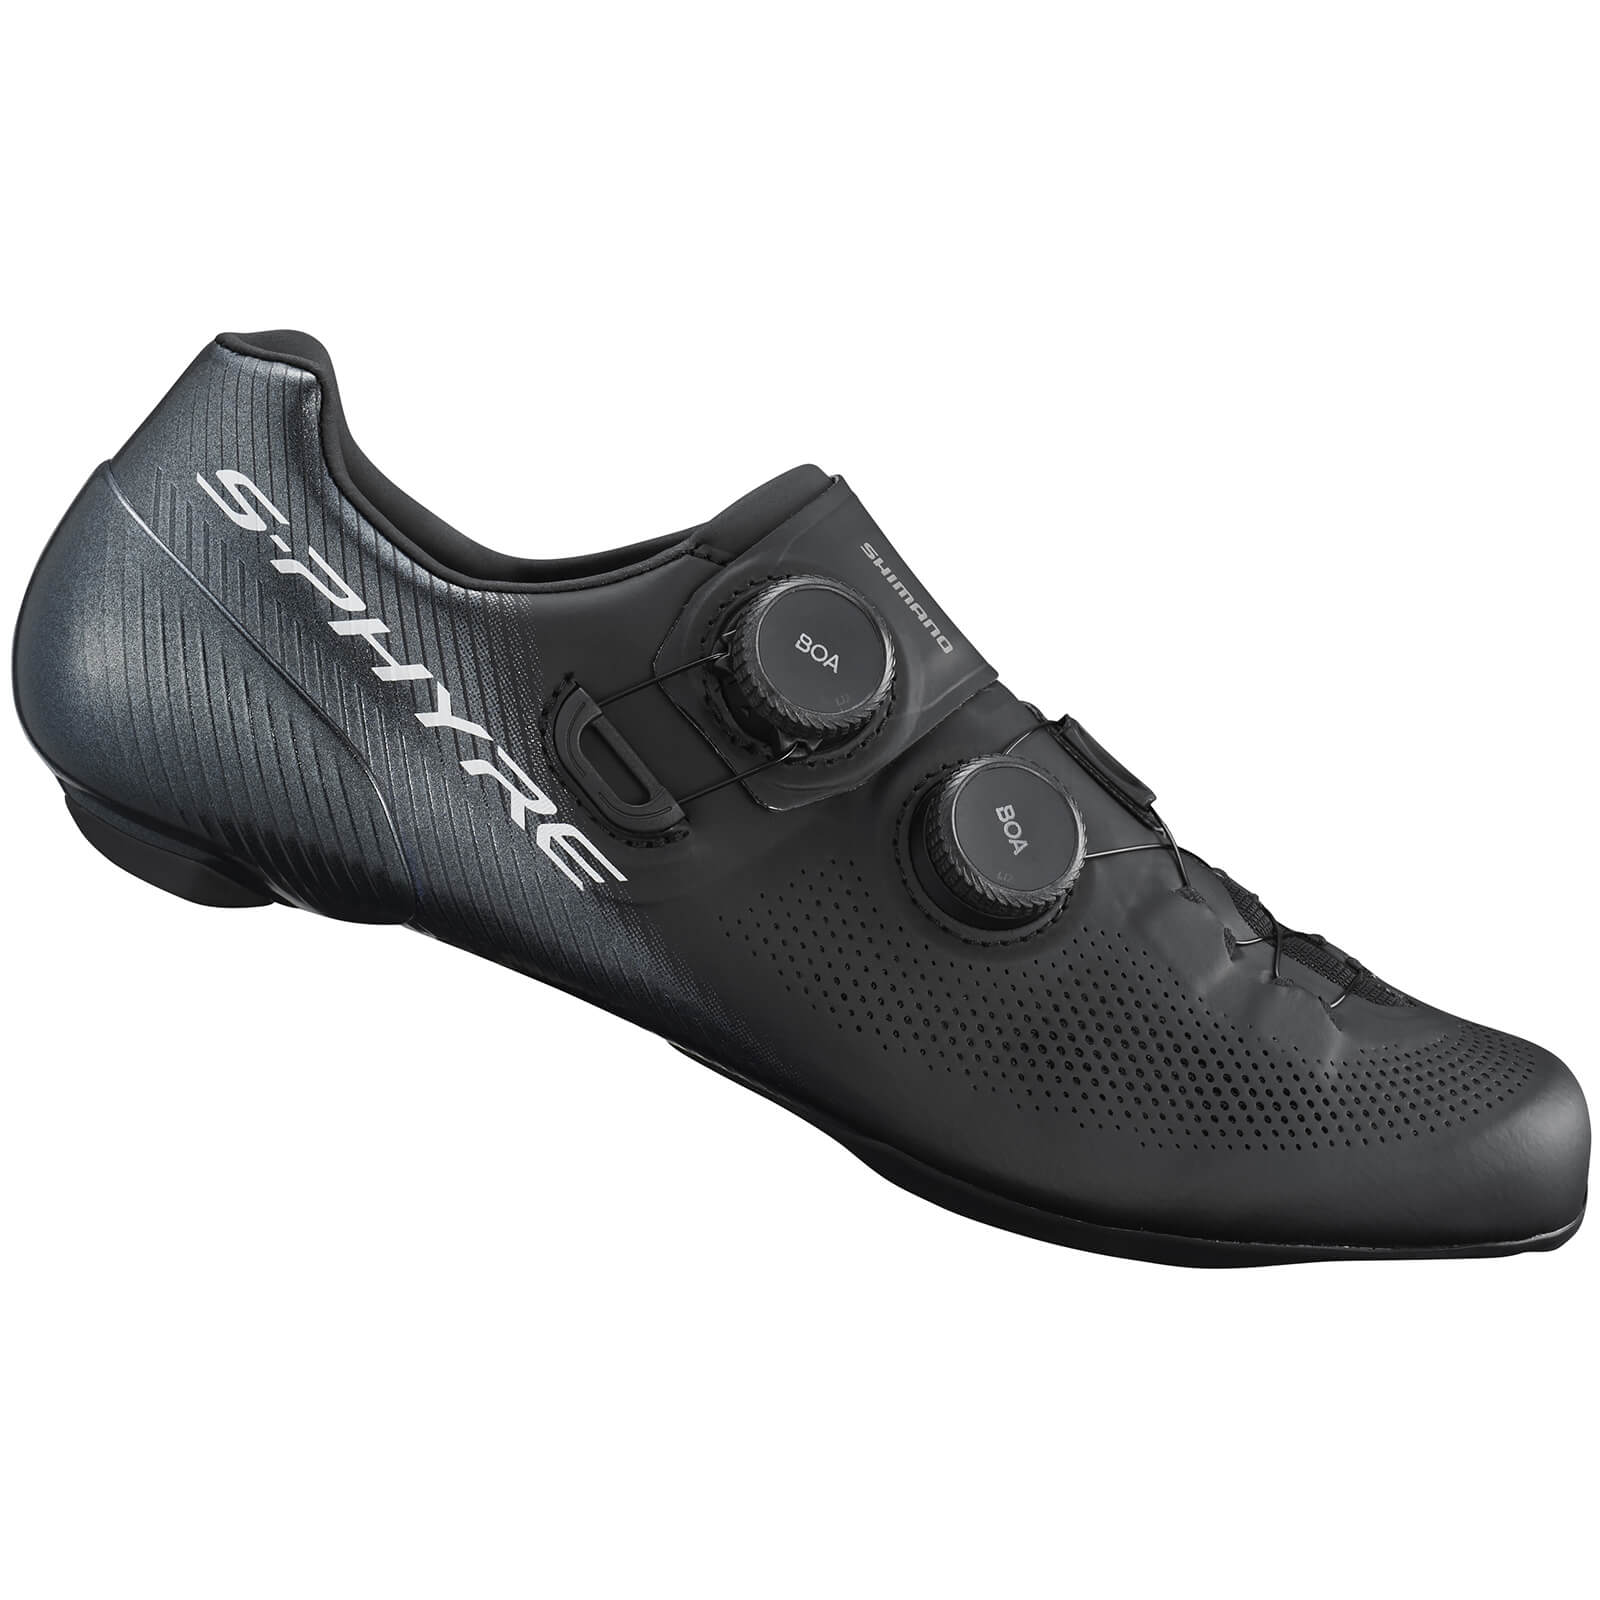 Shimano RC903 S-Phyre Road Cycling Shoes - 46 - Black